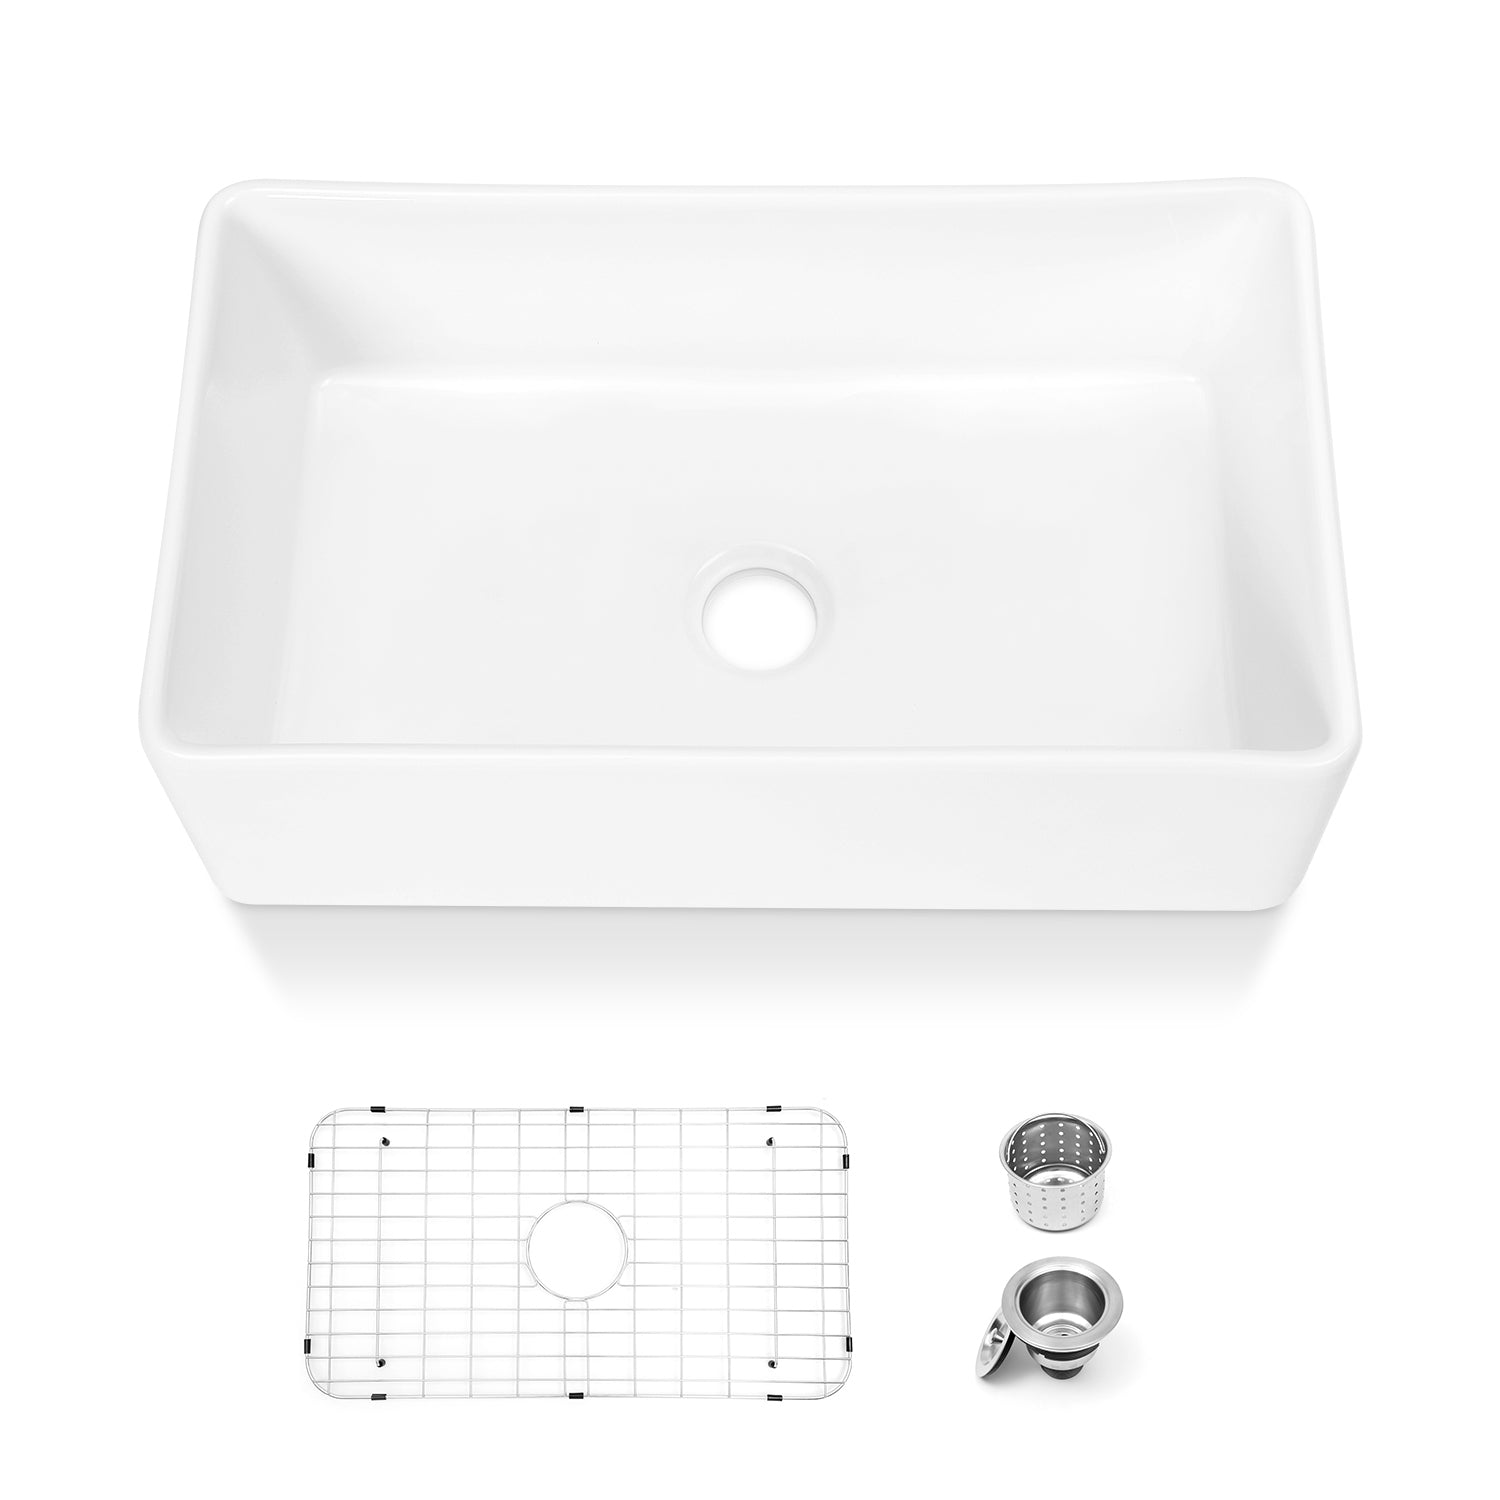 Sinber White Rectangular Ceramic Single Bowl Apron farmhouse Kitchen Sink With Strainer